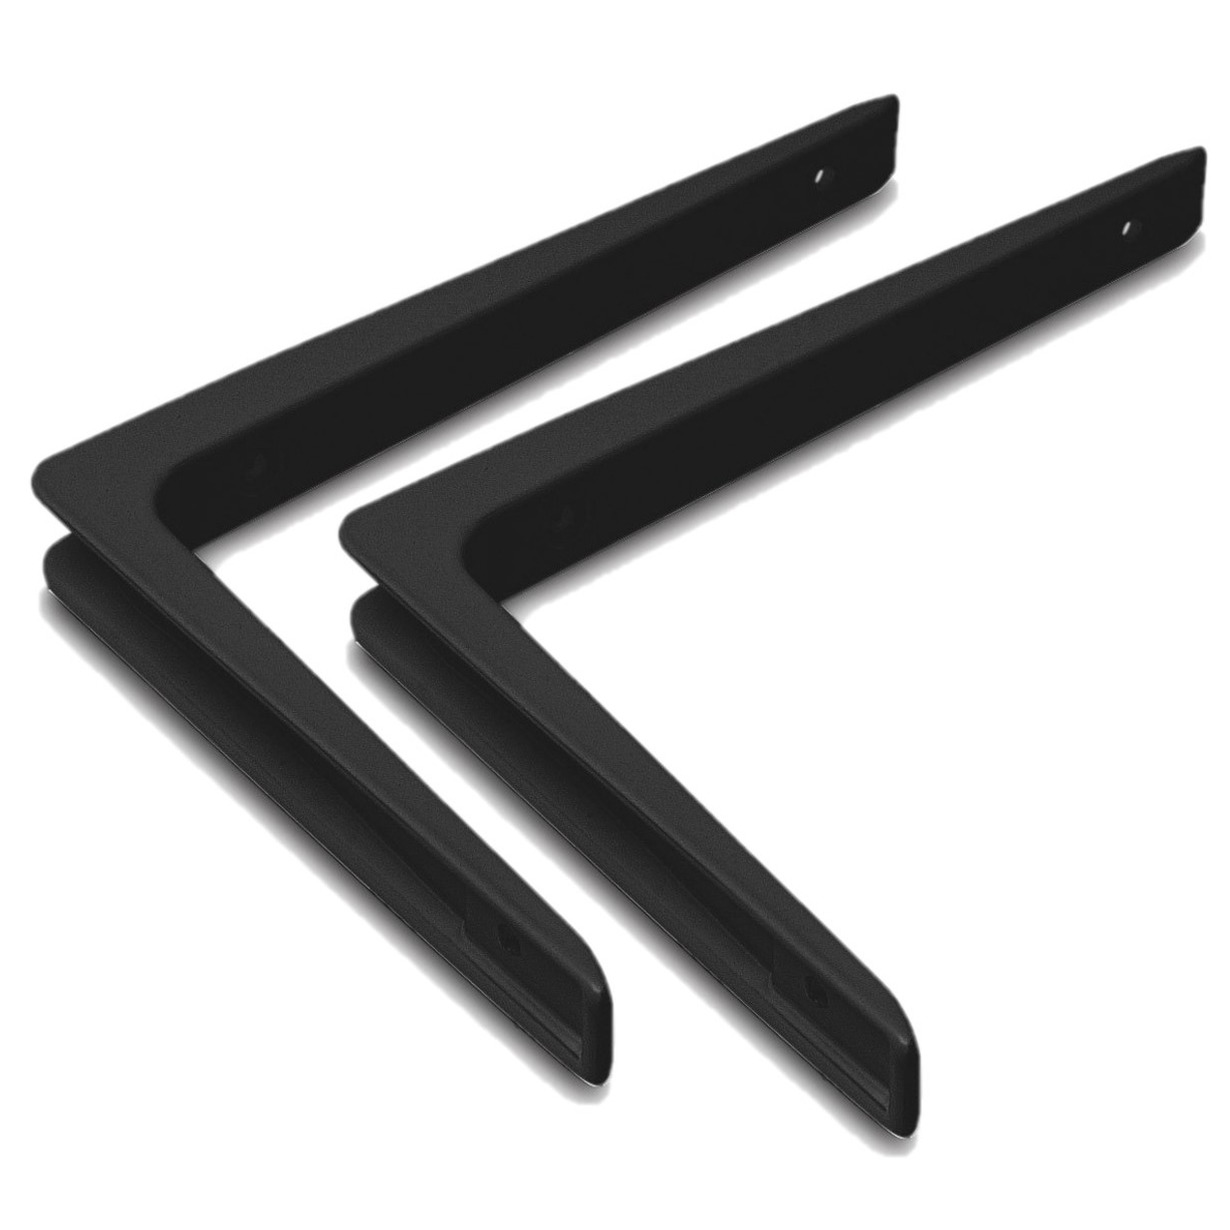 Set van 4x stuks planksteunen-plankdragers zwart gelakt aluminium 30 x 20 cm tot 80 kilo